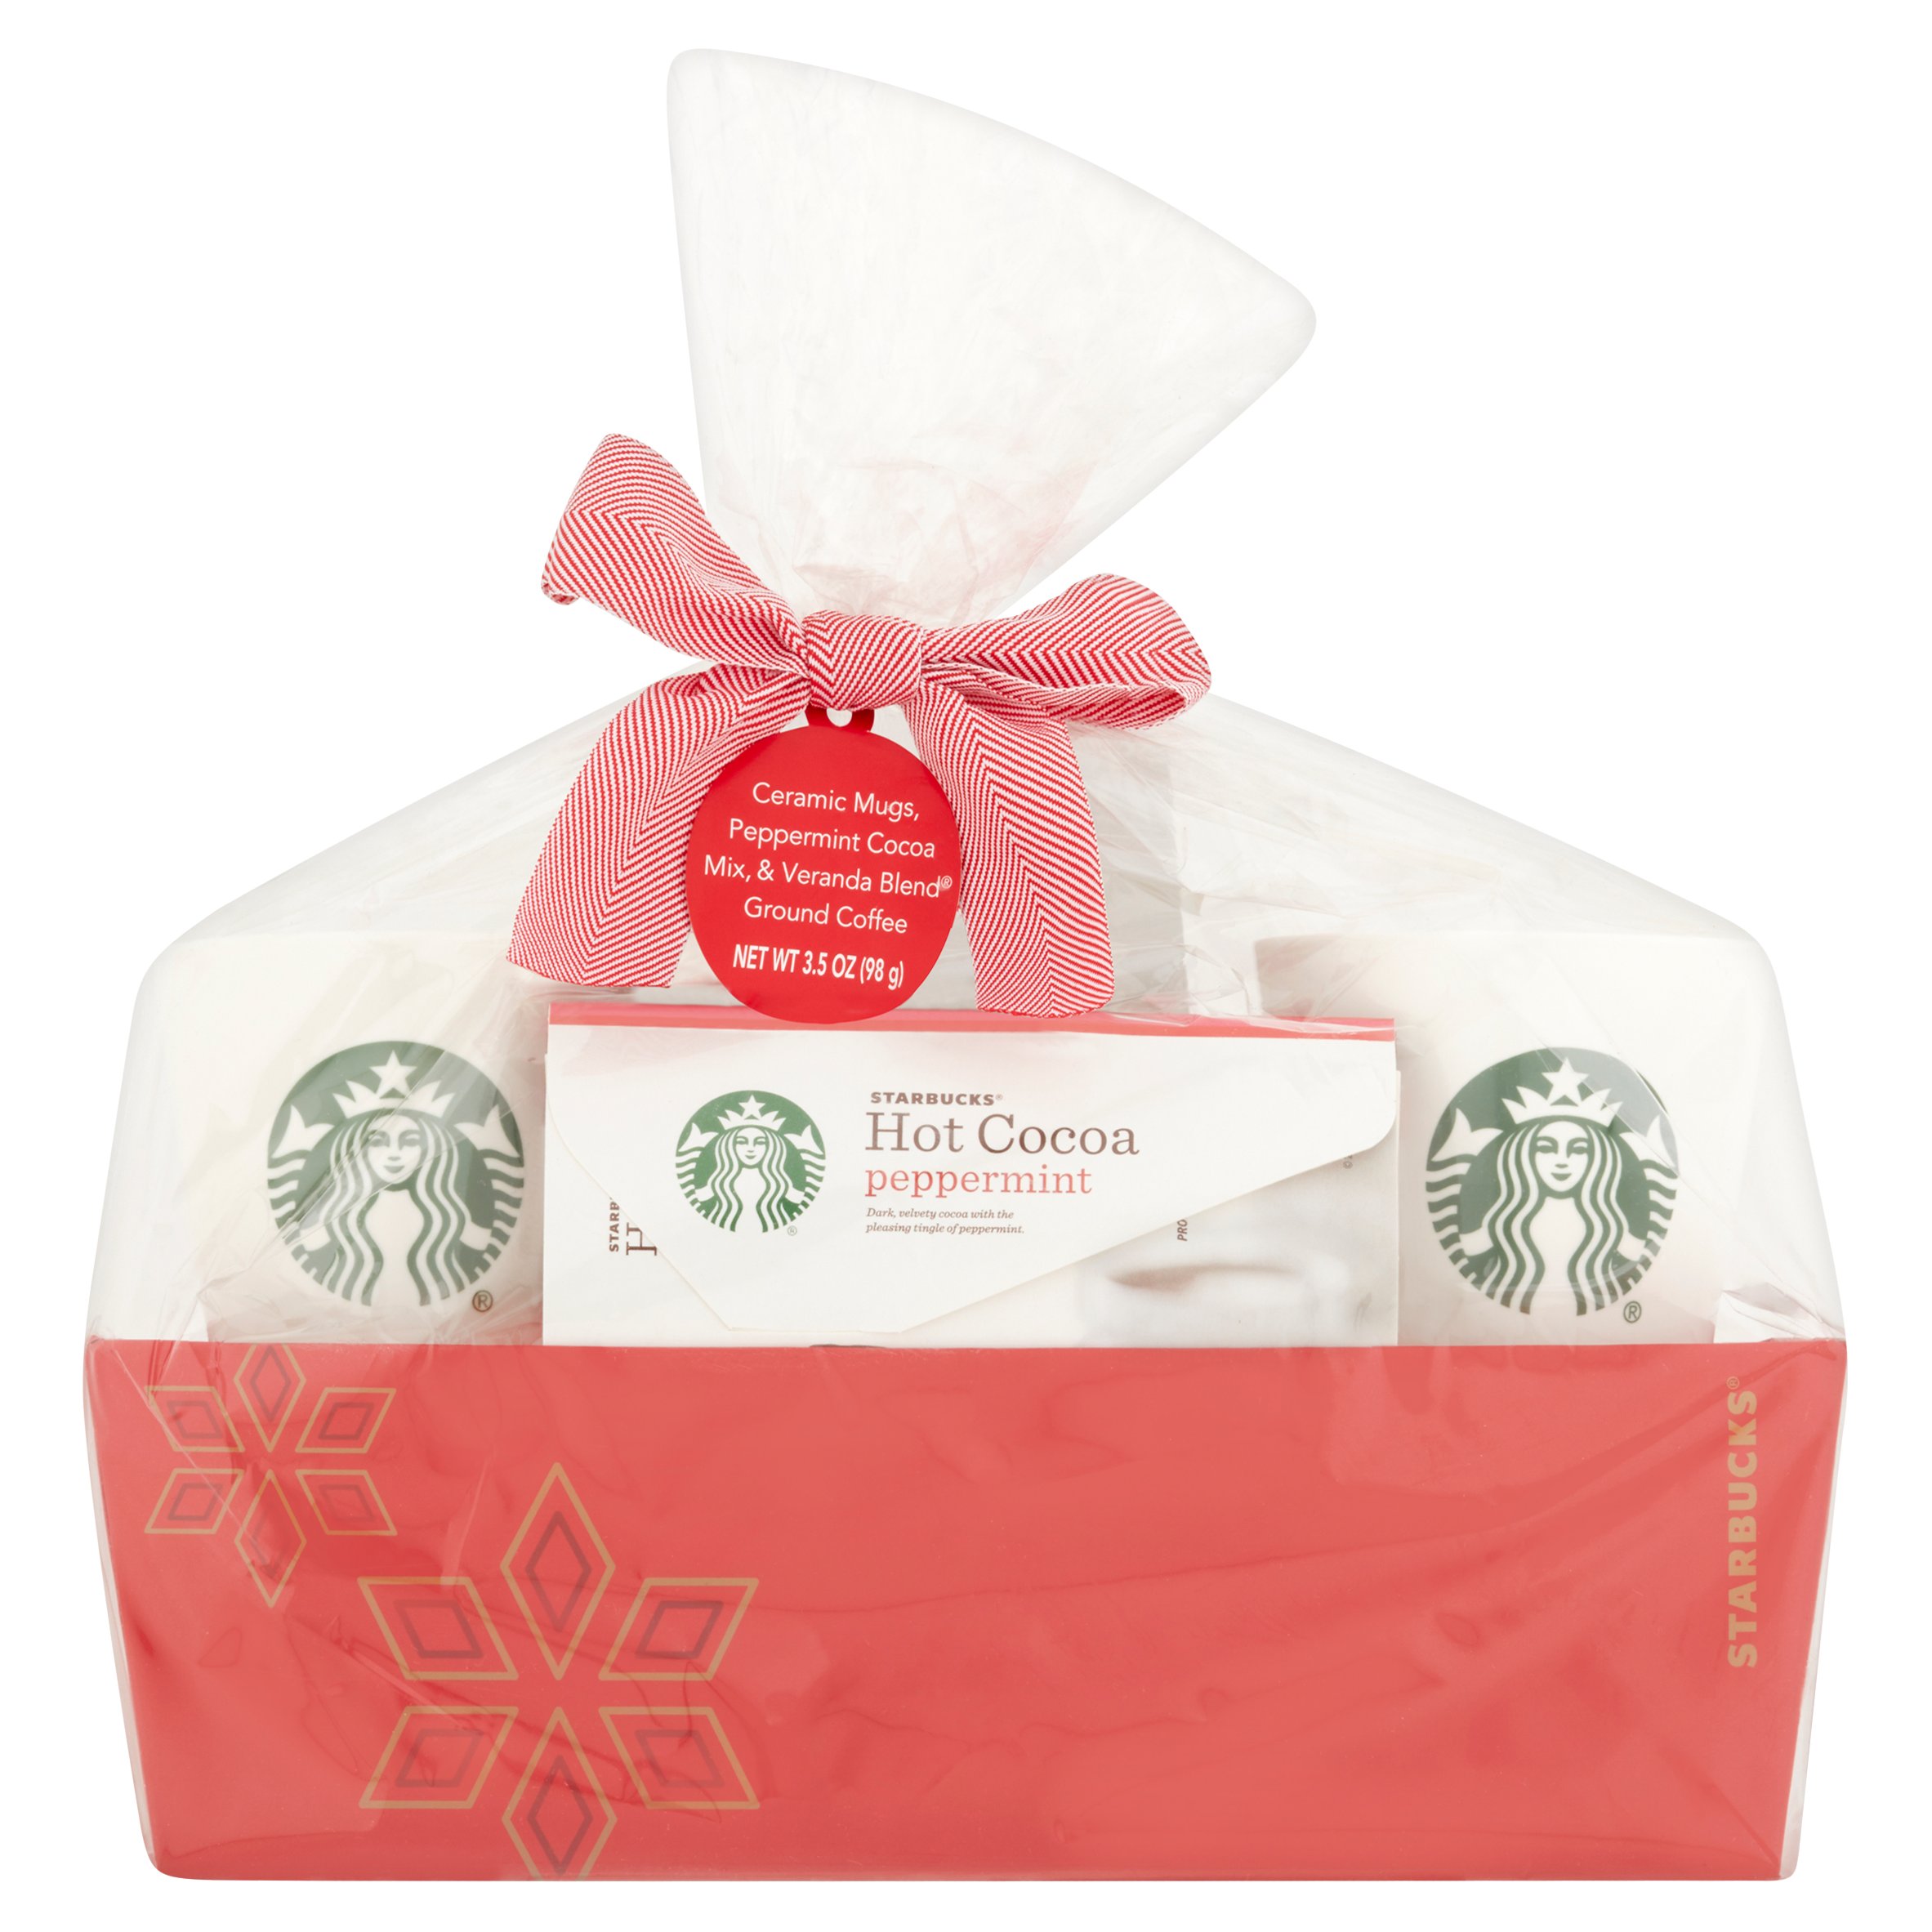 Starbucks Gift Set - image 1 of 5